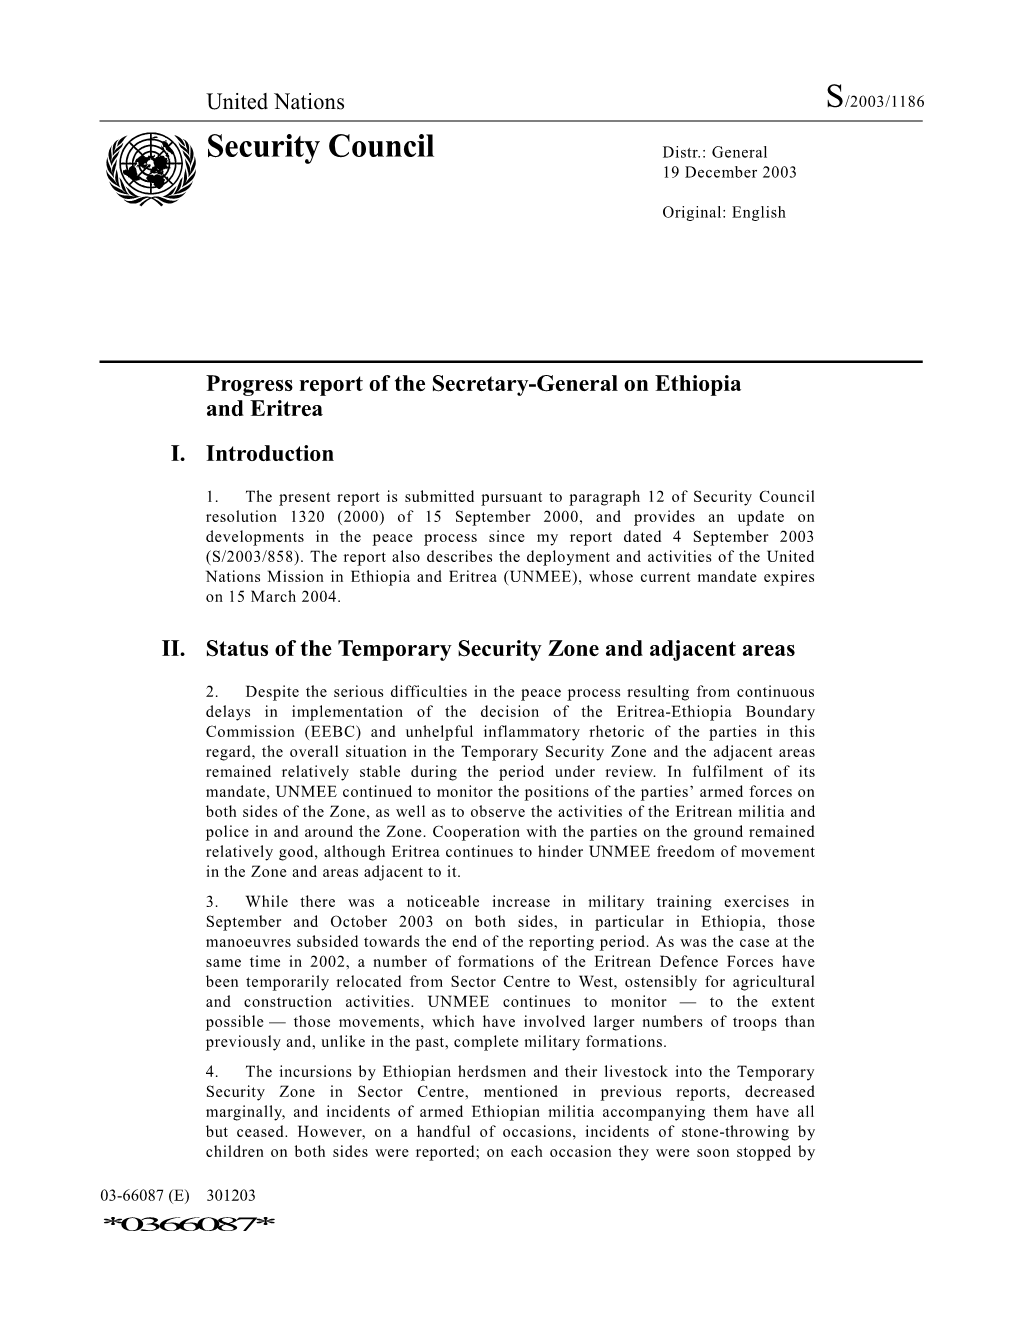 Security Council Distr.: General 19 December 2003